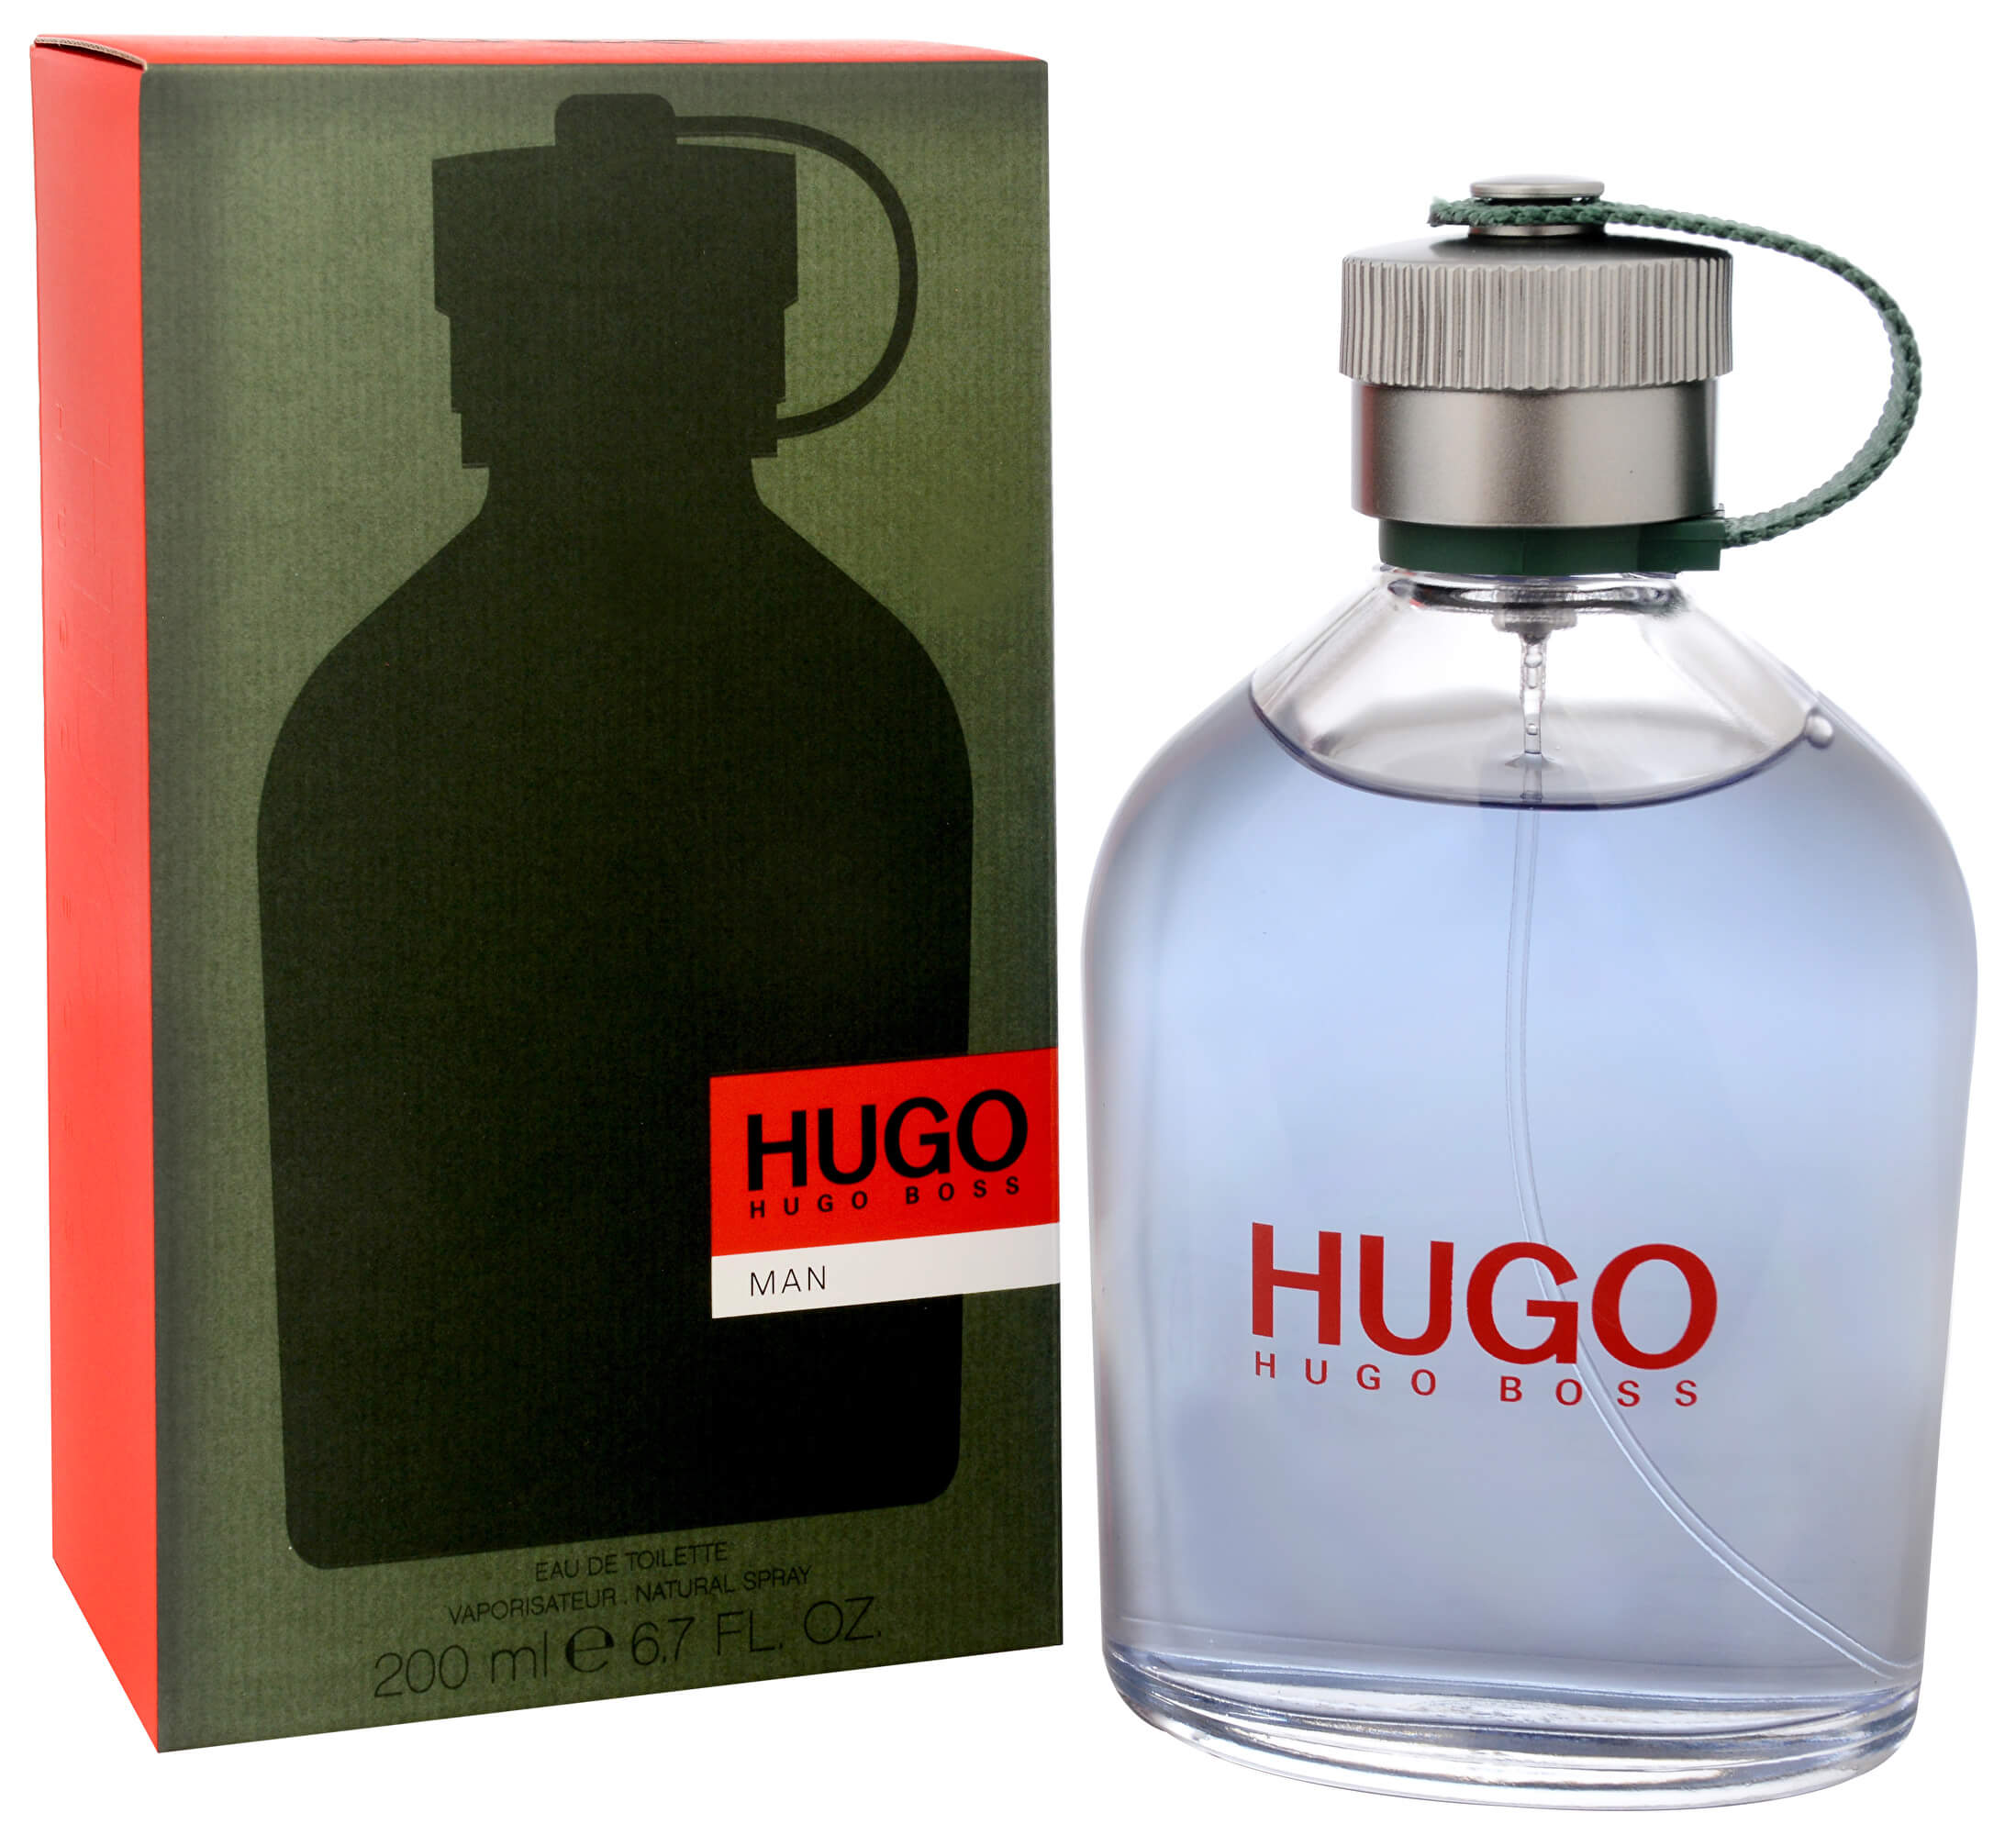 Hugo на русском. Hugo Boss eu de Toilette. Hugo Boss 200 мл. Туалетная вода Hugo Boss Hugo Art Limited Edition. Парфюмерная вода Hugo Boss Hugo create Limited Edition.